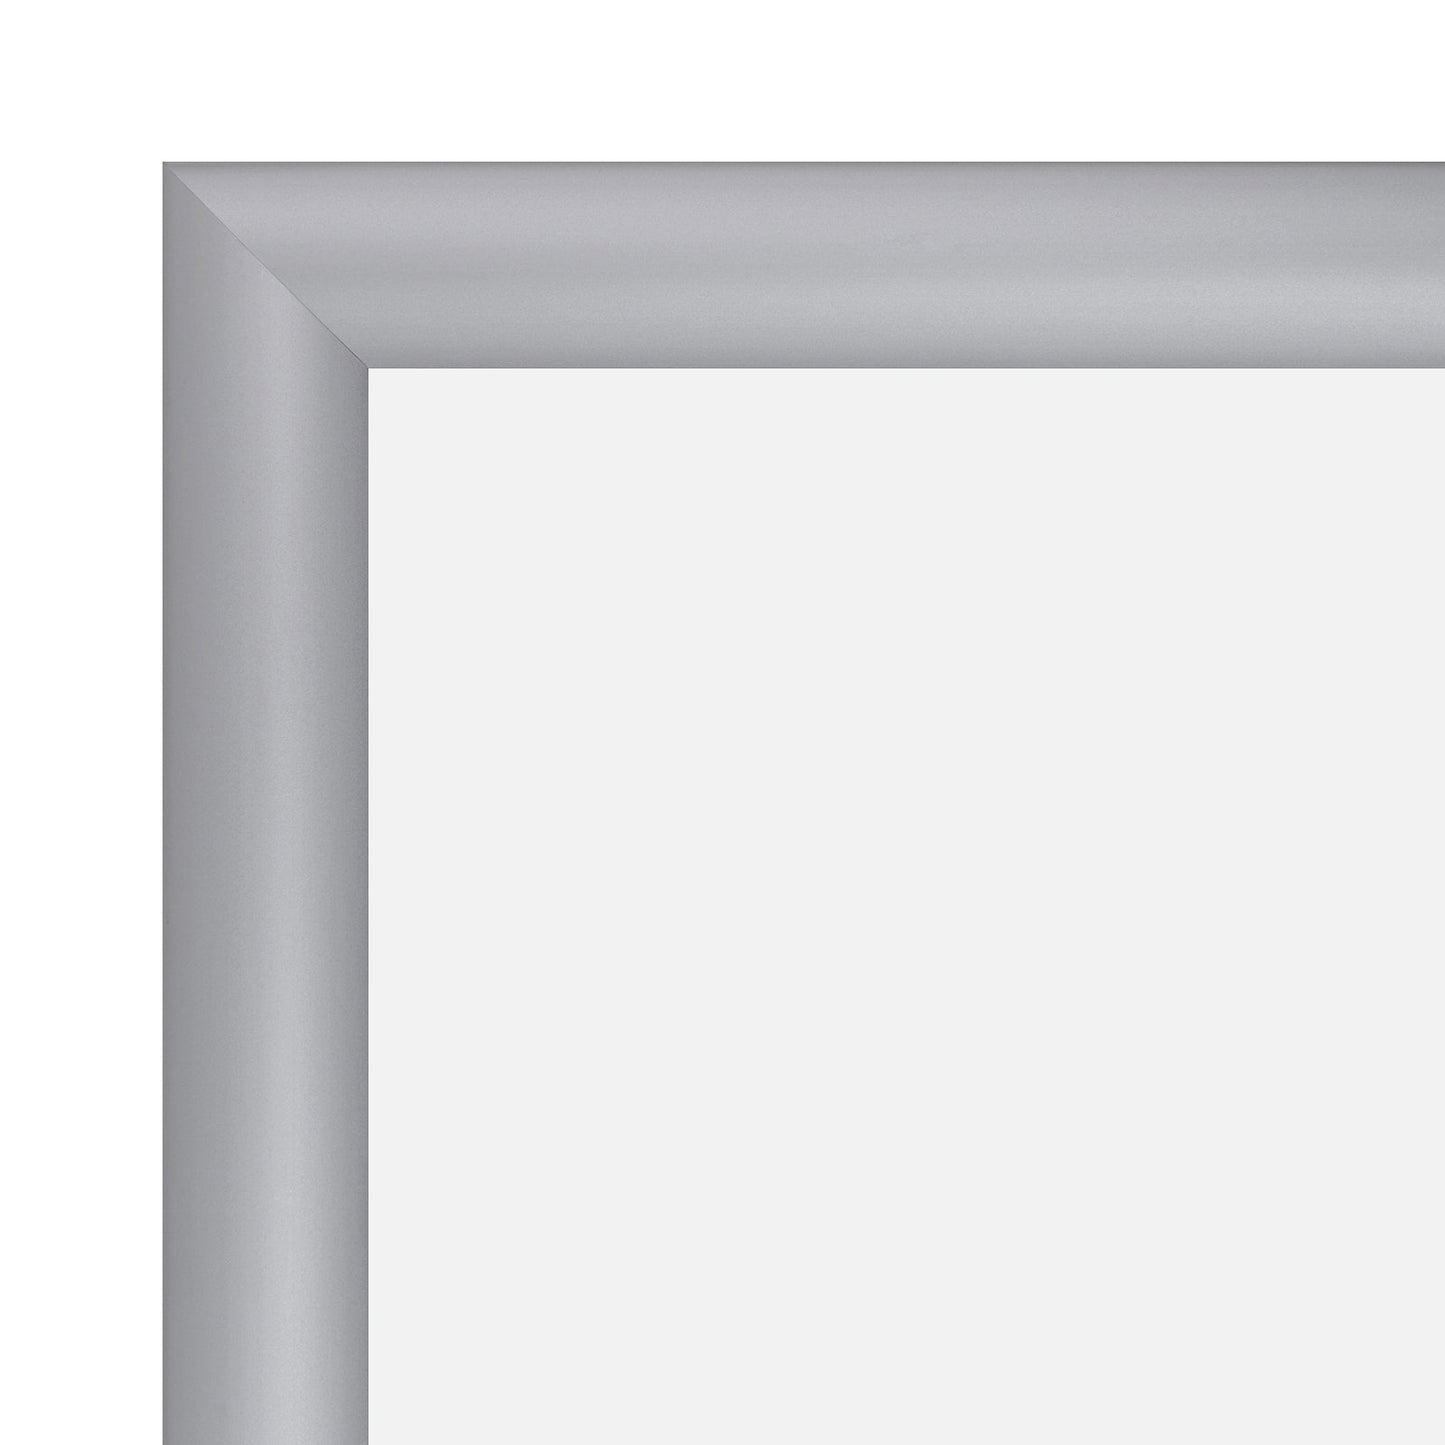 8.5x11 Silver SnapeZo® Snap Frame - 1.2" Profile